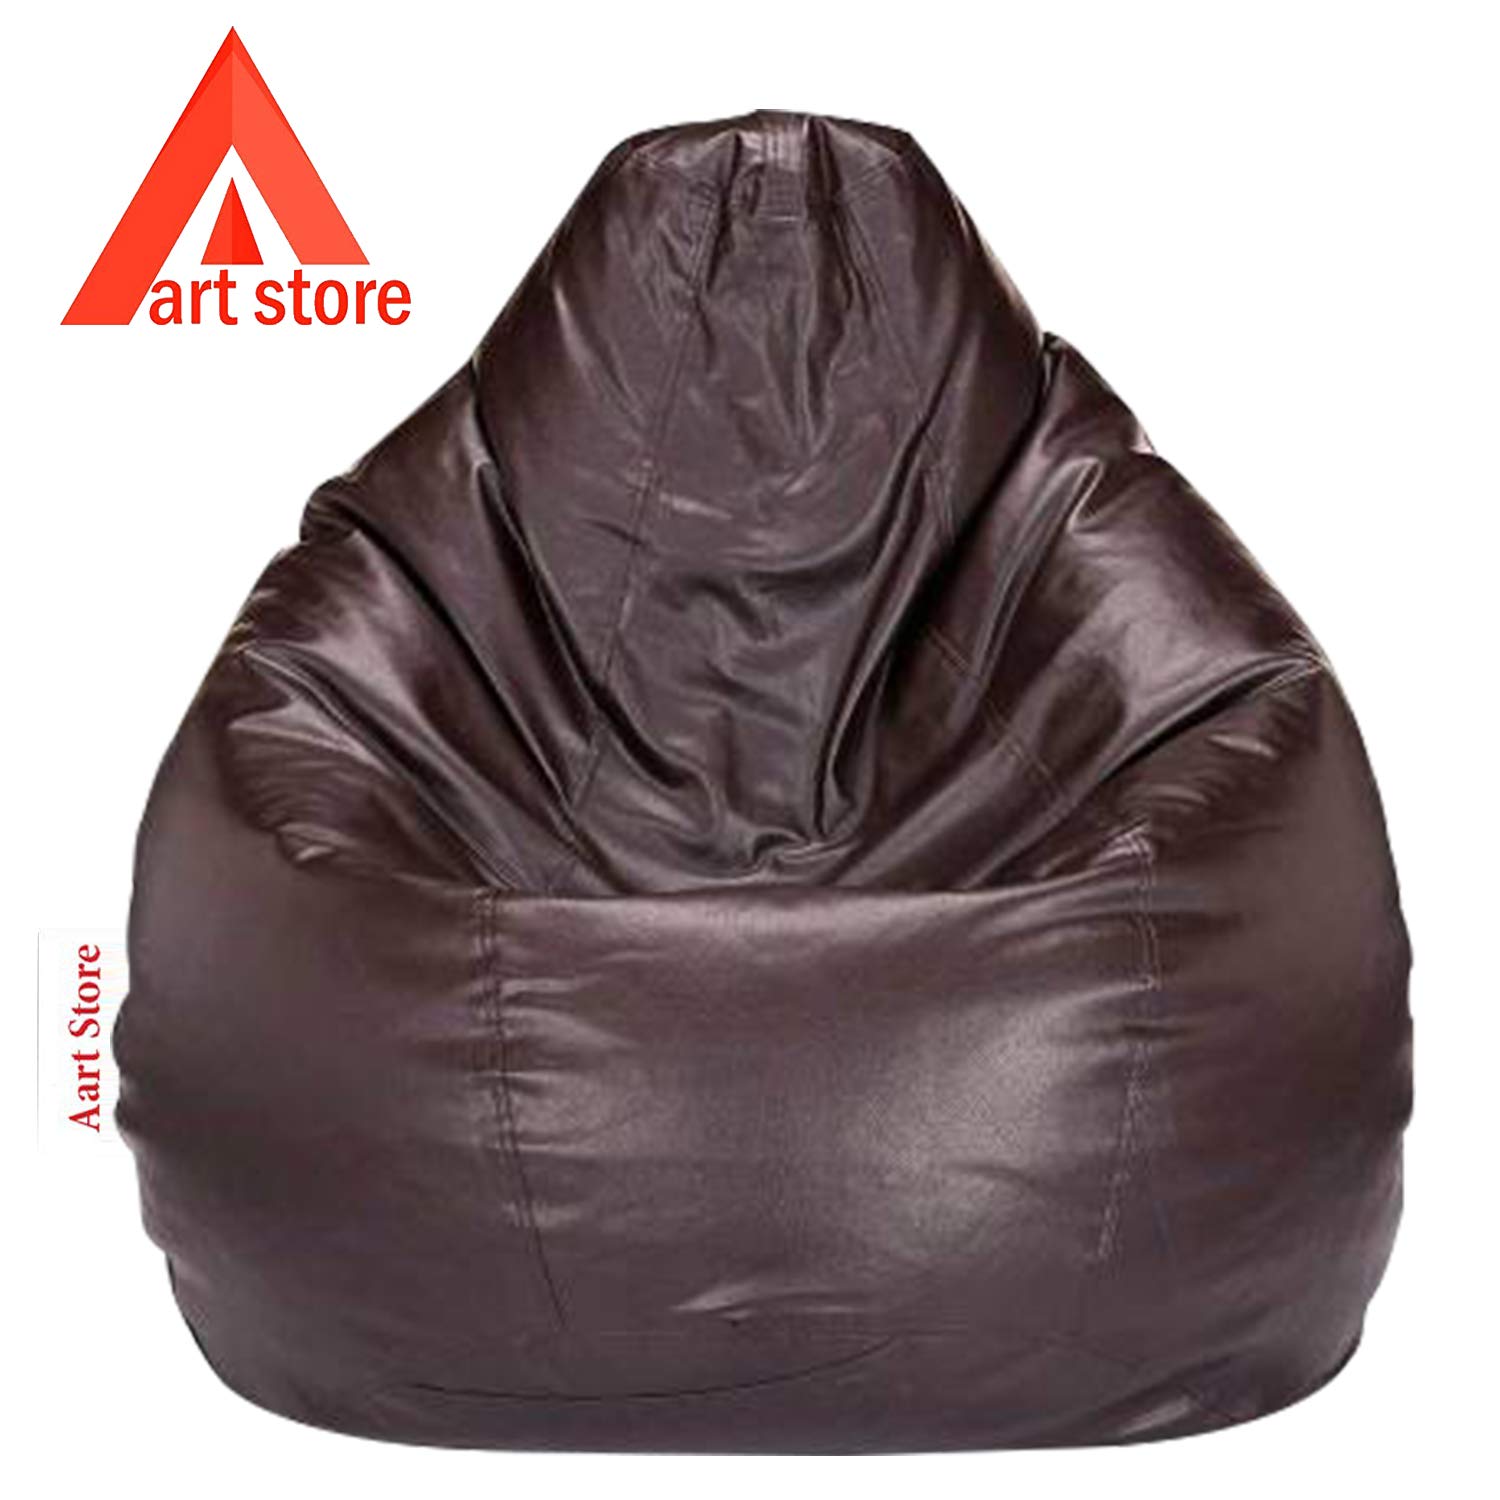 Aart Store Classic Bean Bag